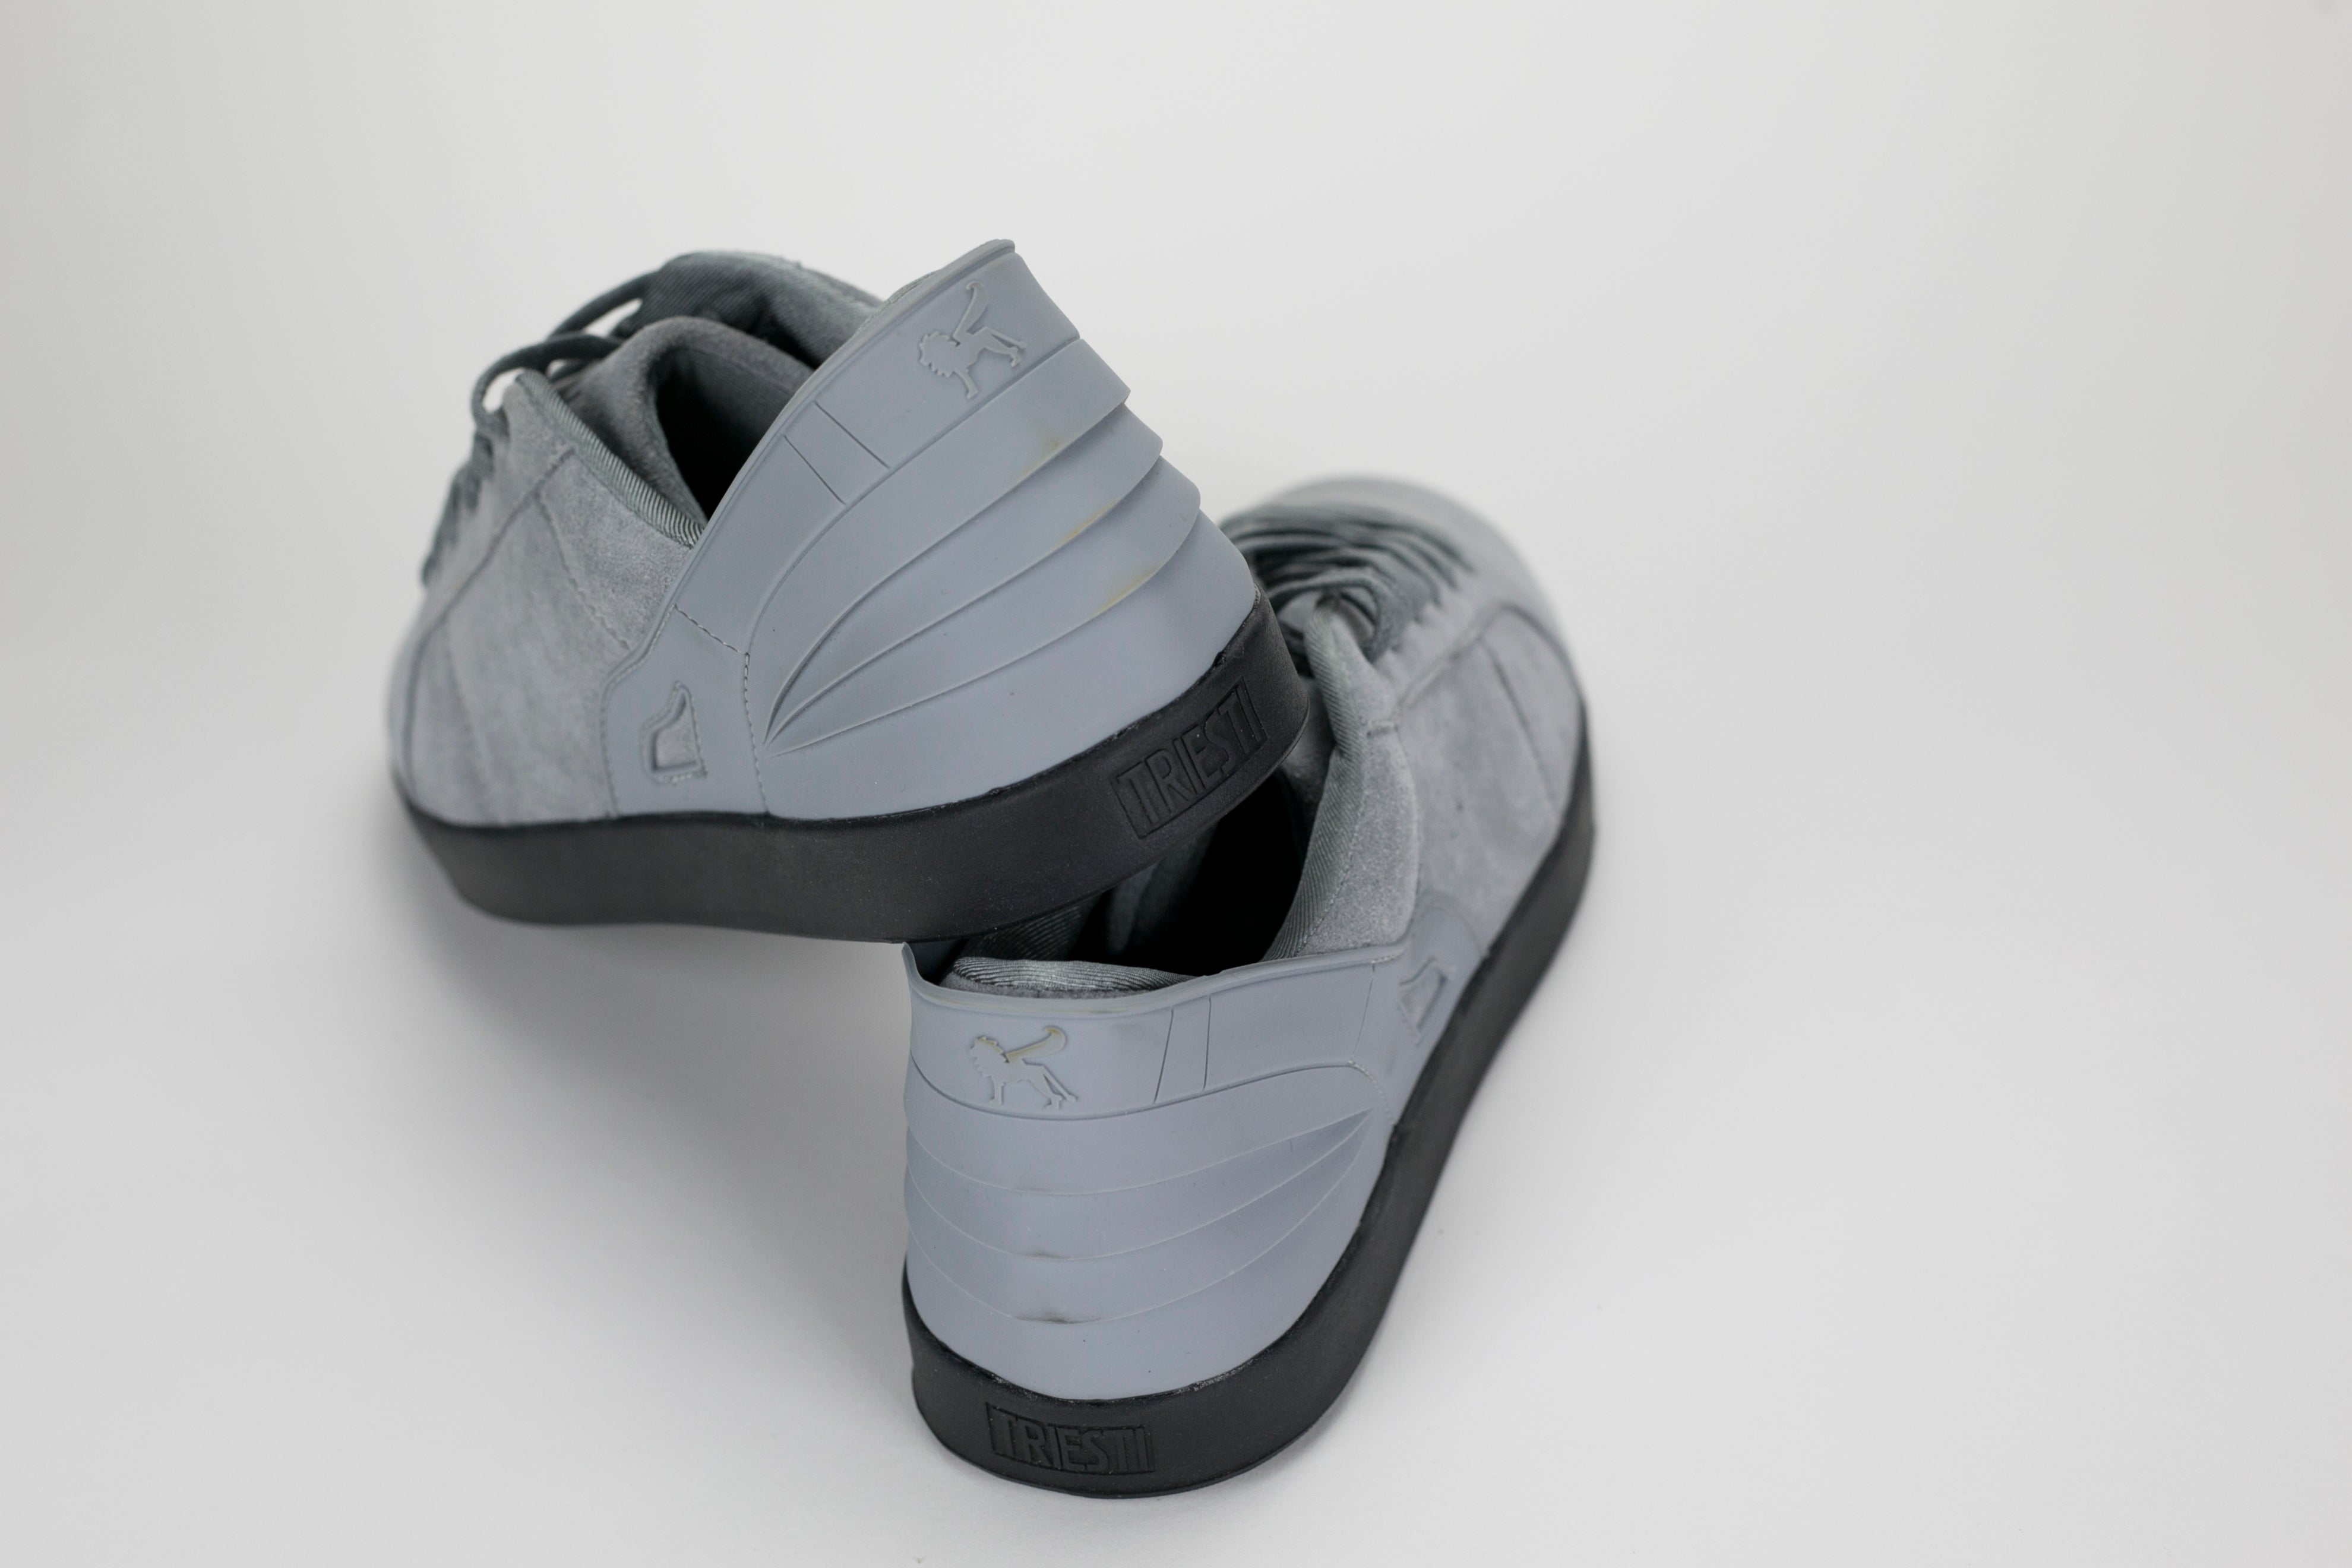 Triesti Shell Shoes - Grey Suede